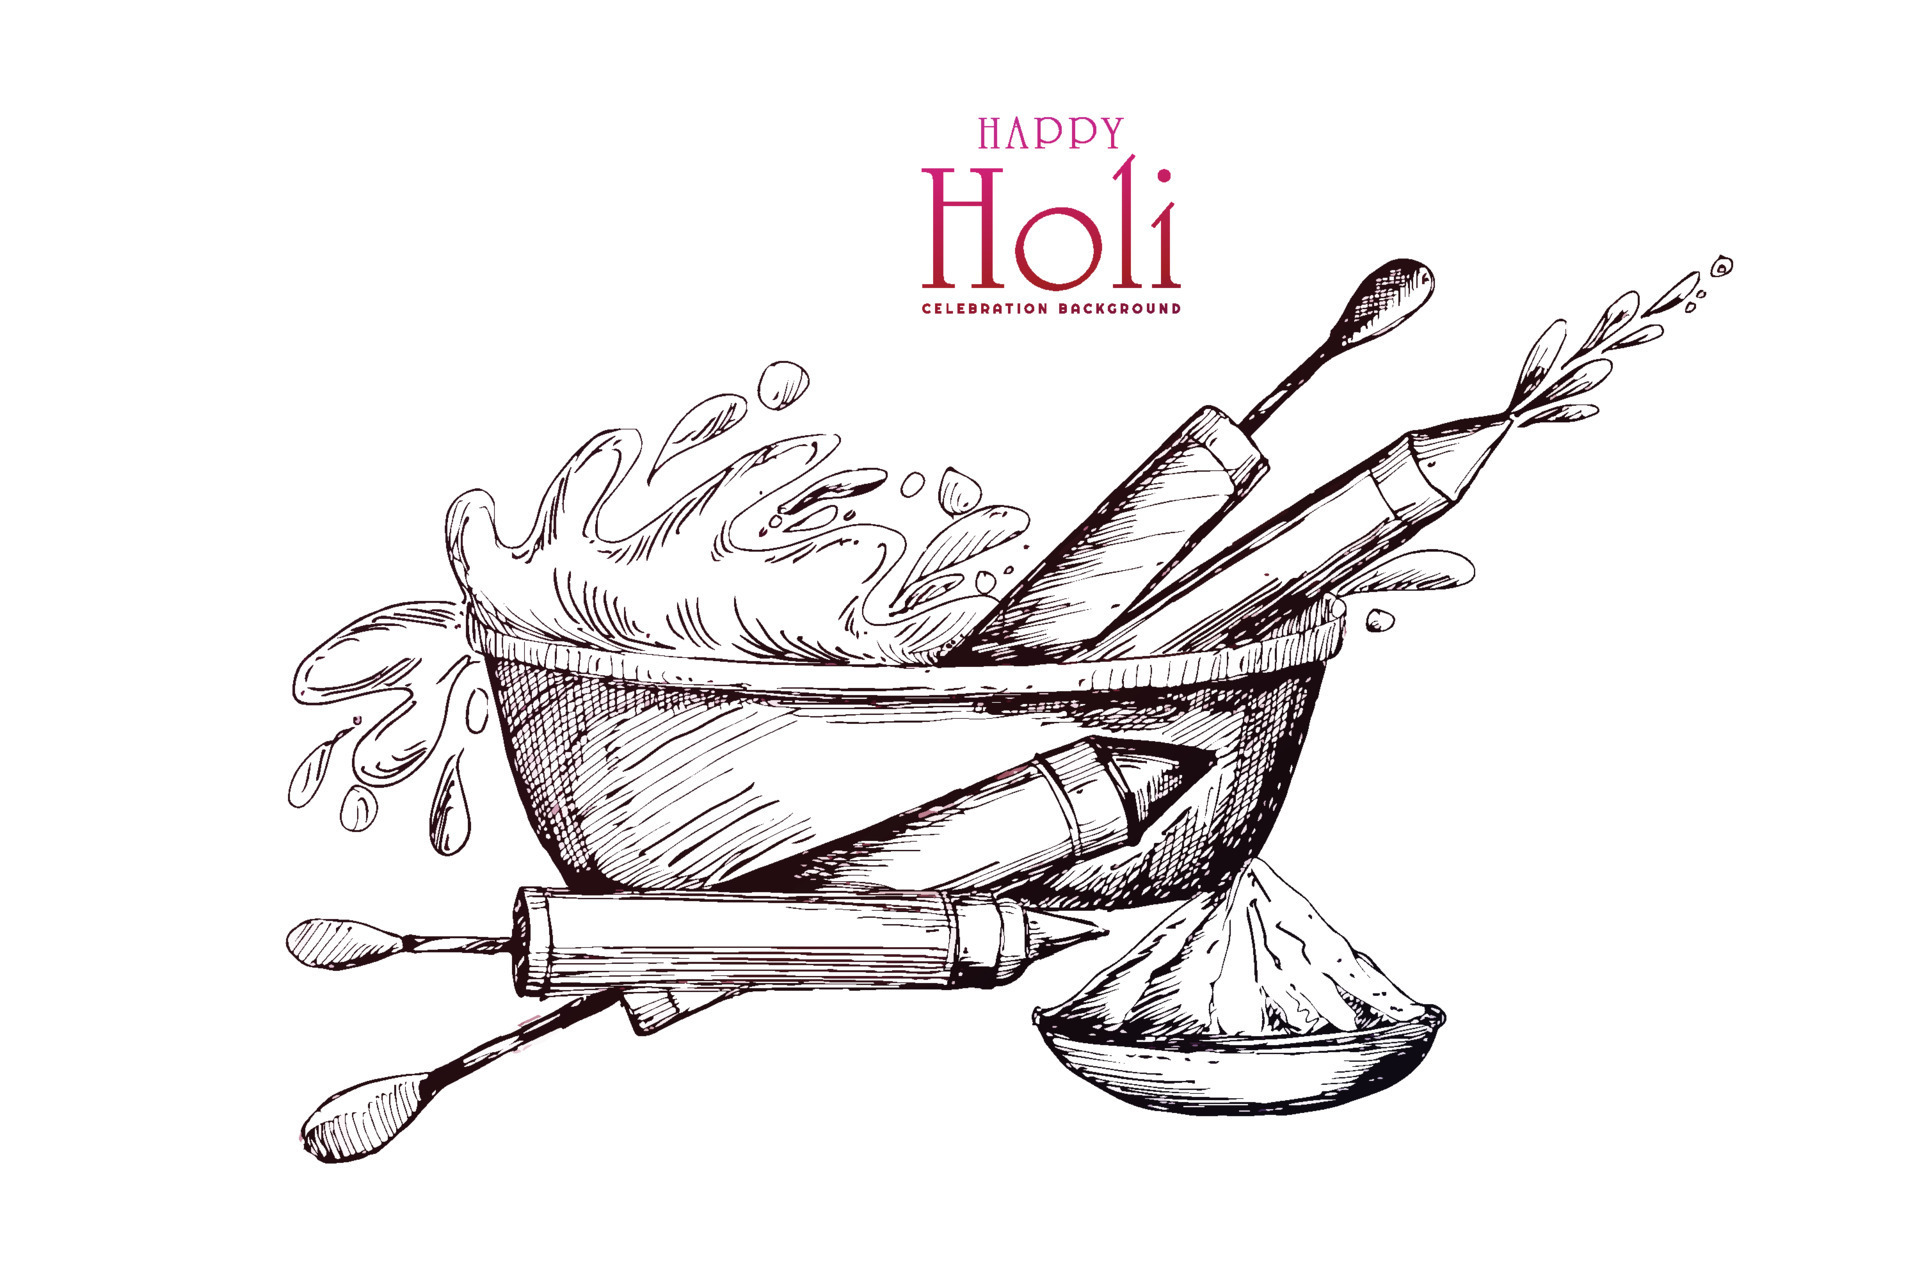 Holi Festival Drawing Photos and Images | Shutterstock-saigonsouth.com.vn